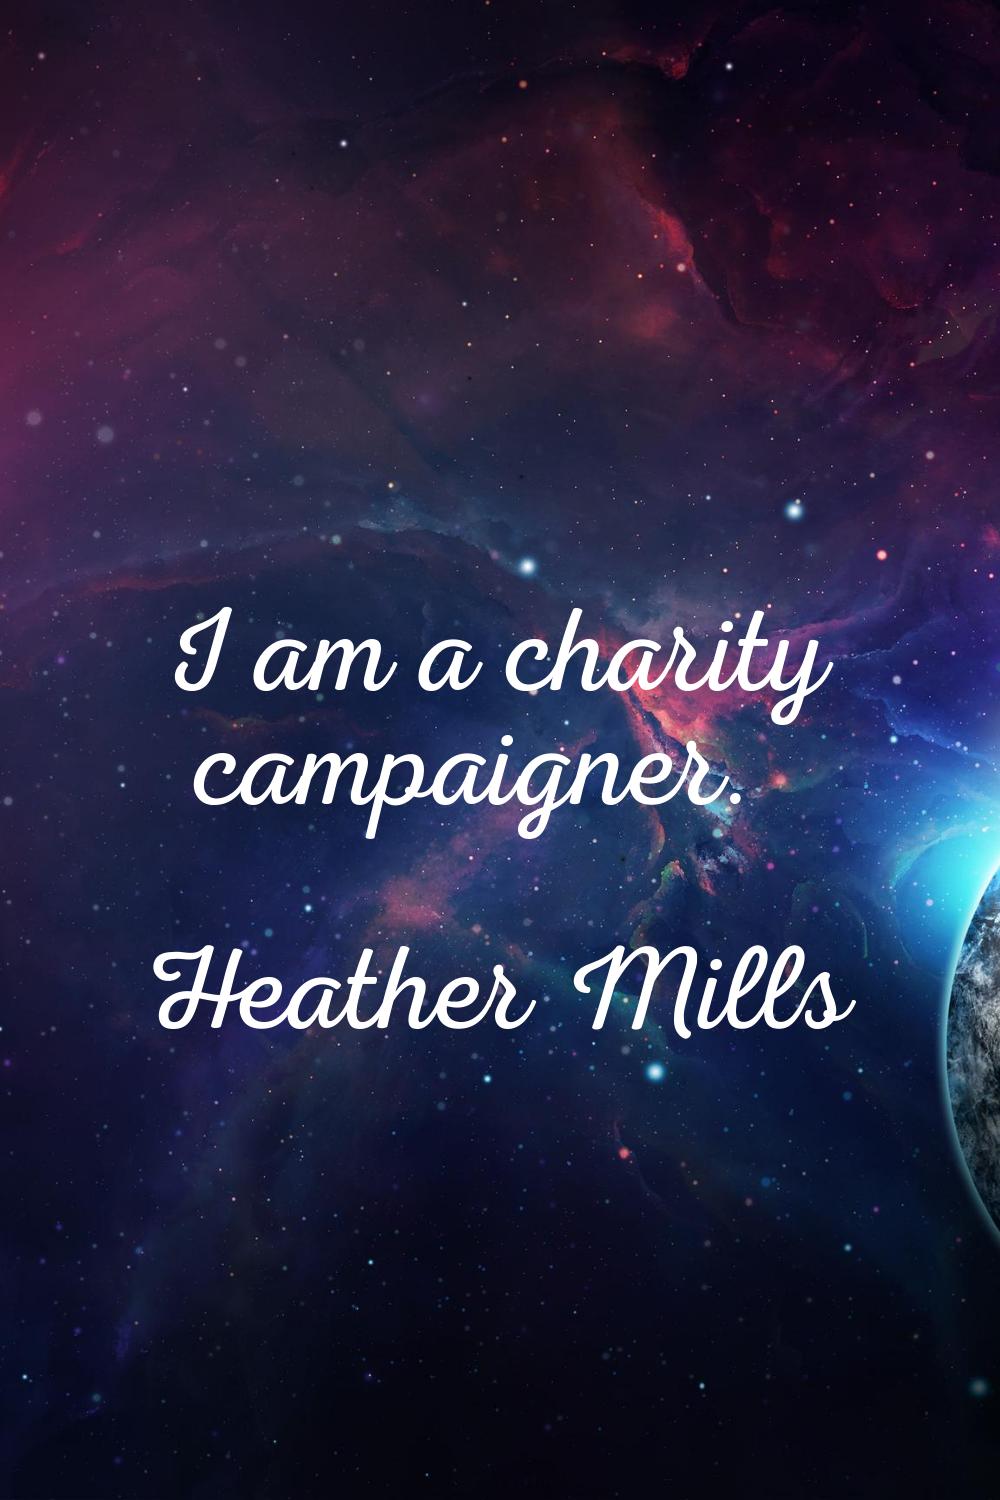 I am a charity campaigner.